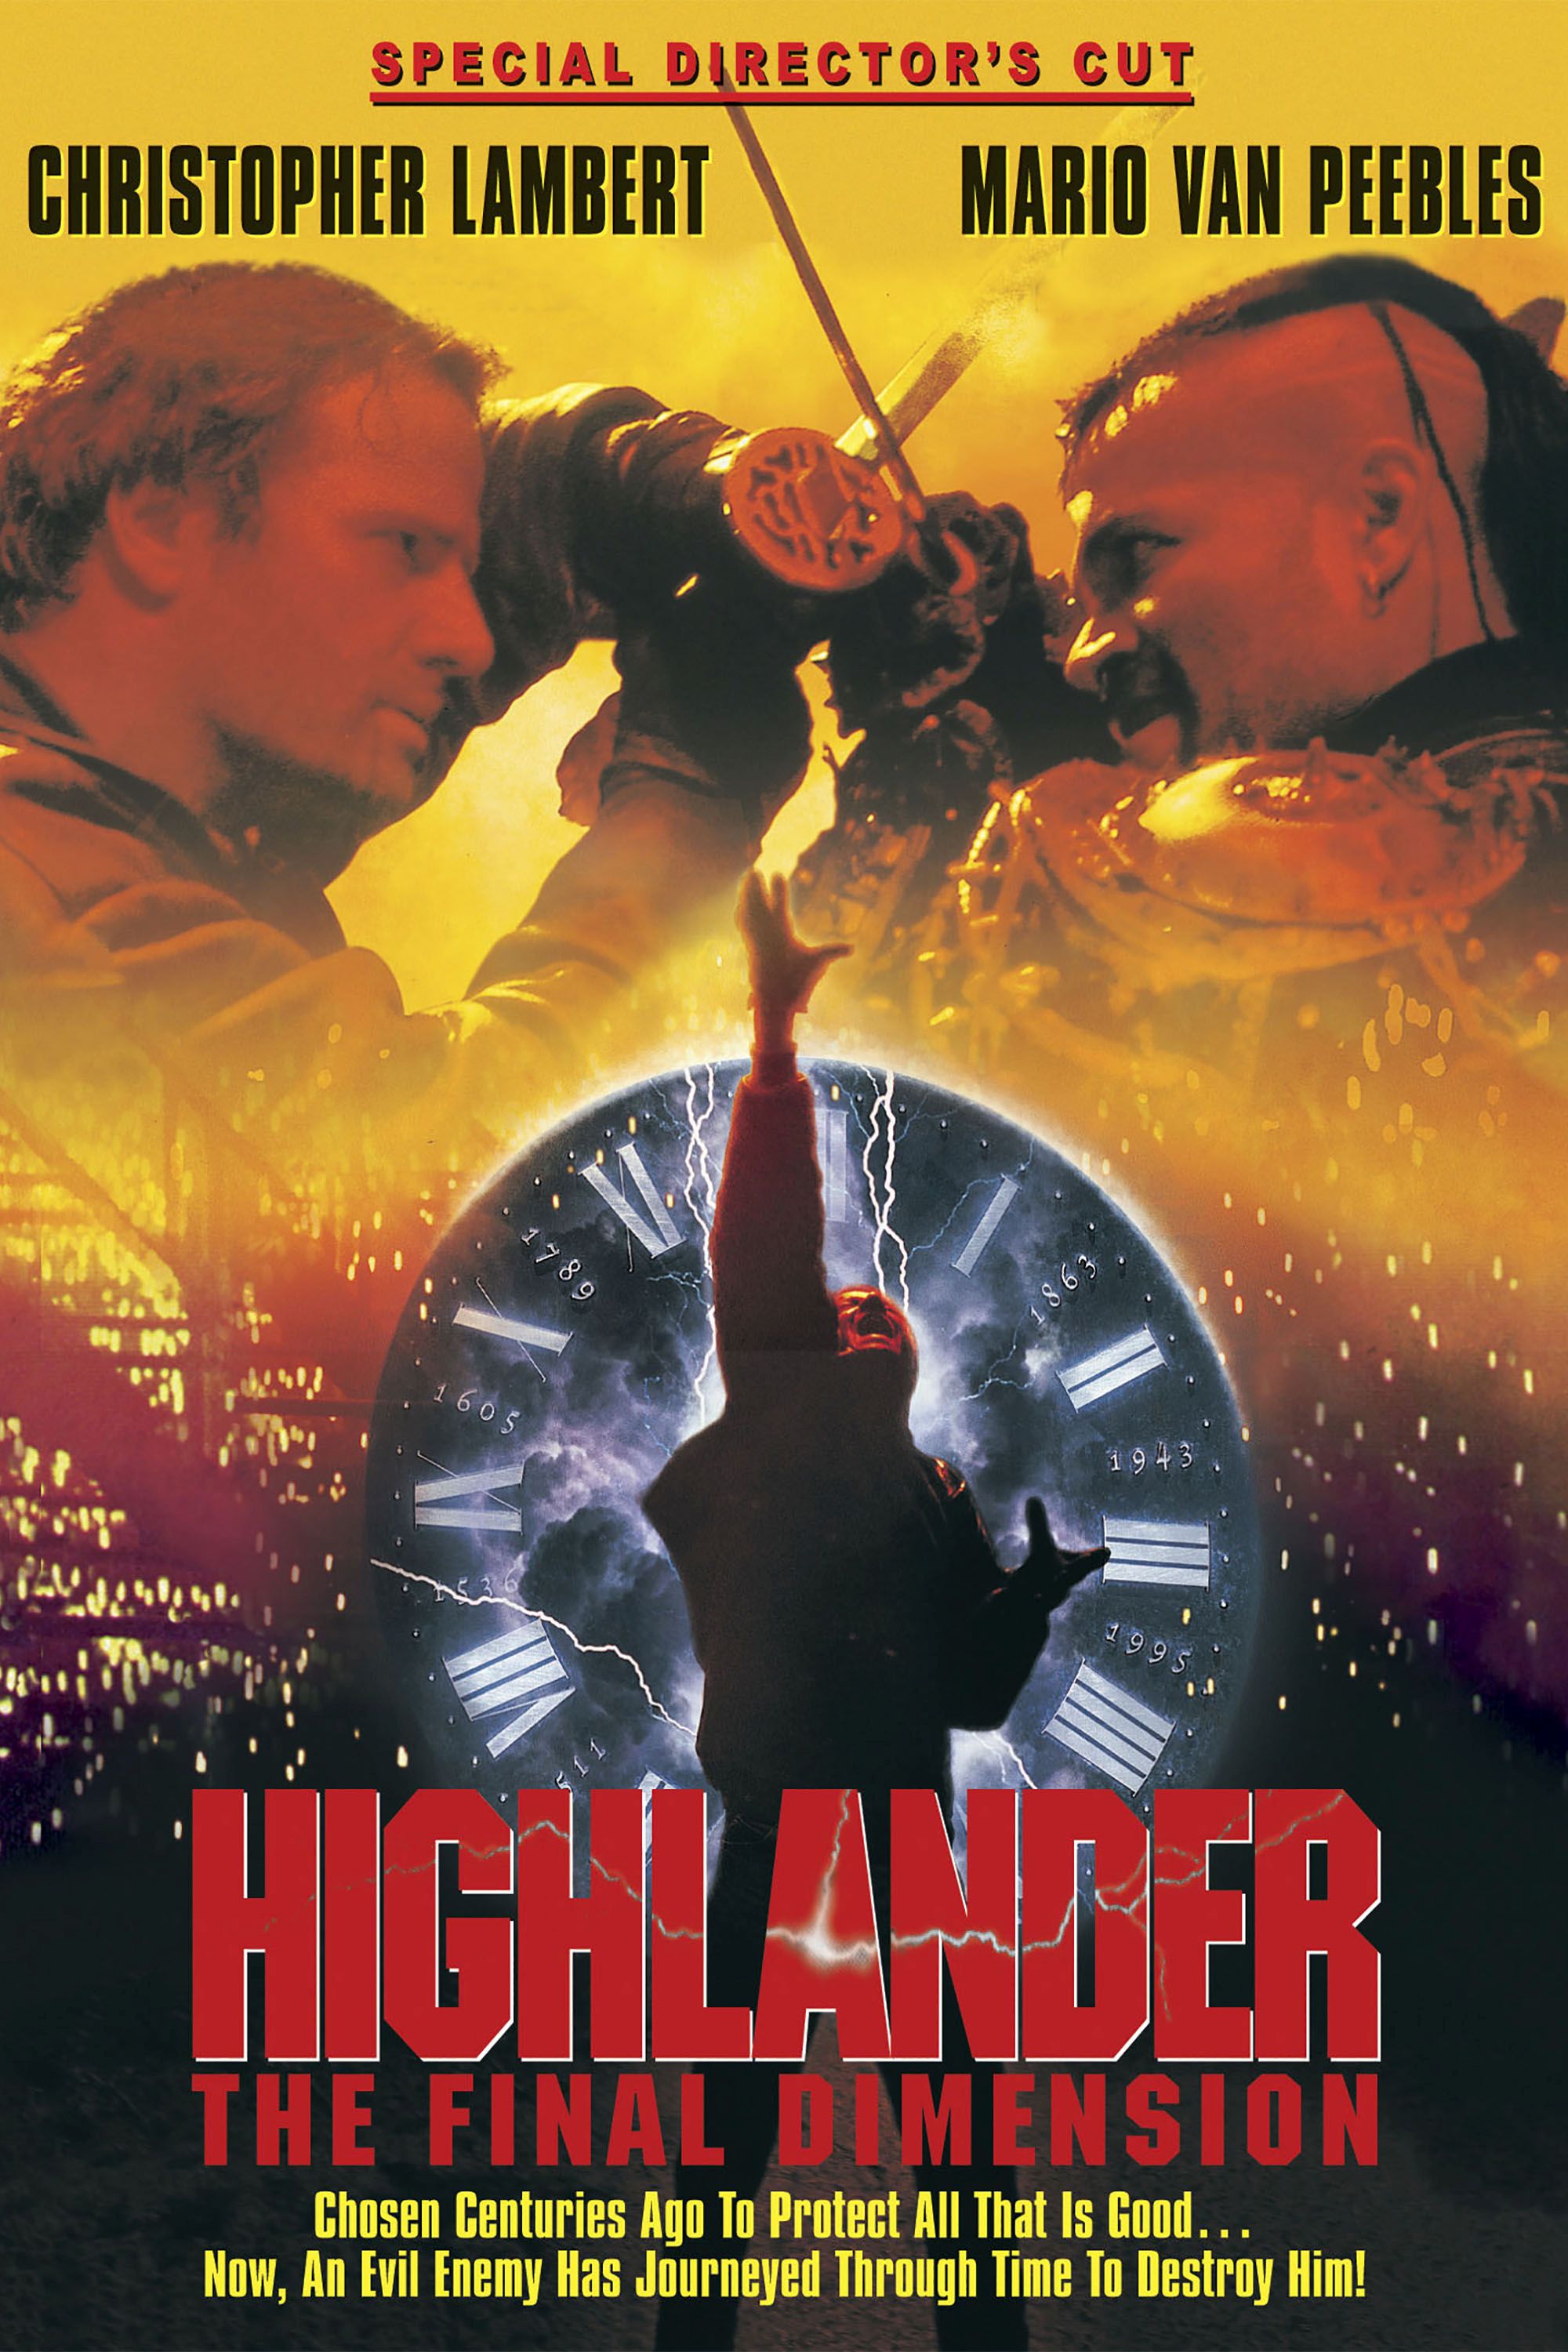 Highlander: The Final Dimension (1995) Main Poster